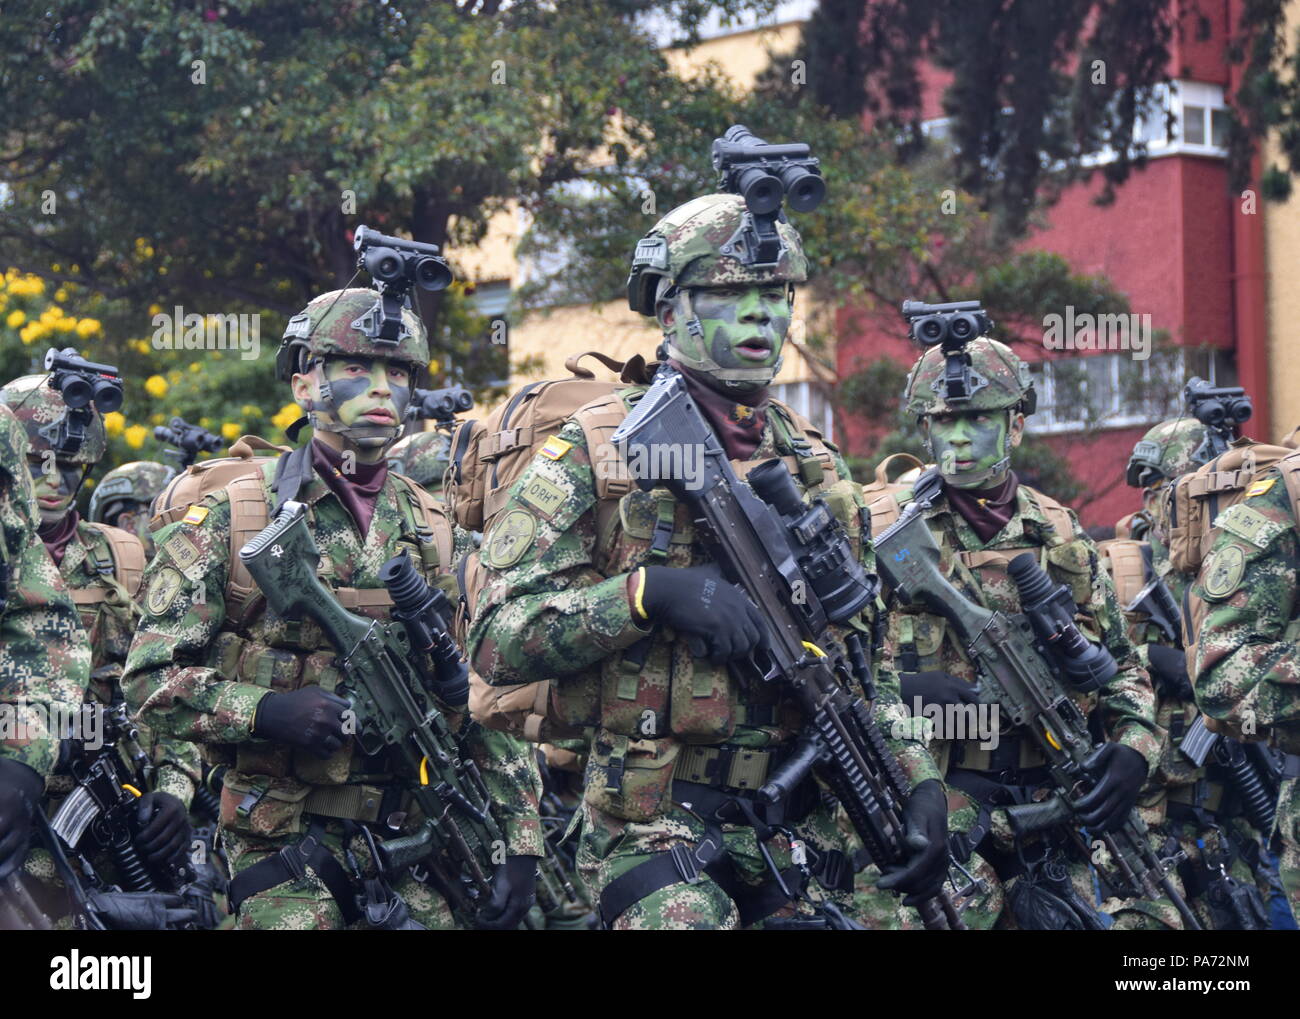 Bogota, Kolumbien. vom 20. Juli 2018, Bogota, Kolumbien - besondere Kräfte an den kolumbianischen Unabhängigkeitstag Militärparade Credit: James Wagstaff/Alamy leben Nachrichten Stockfoto